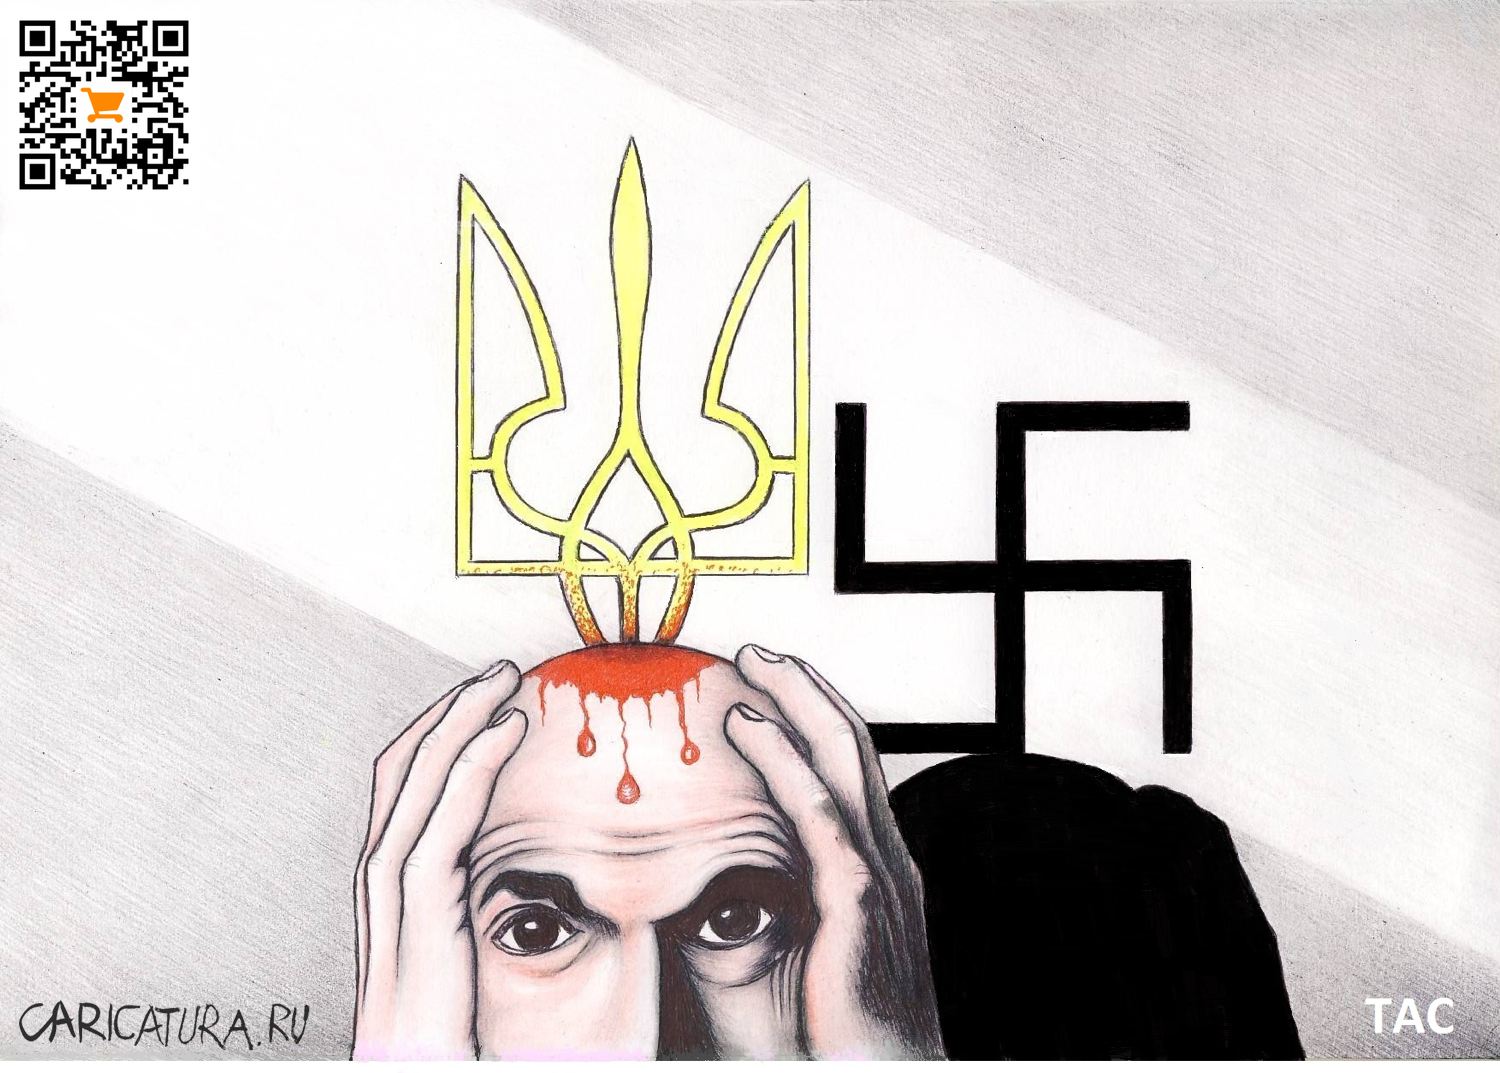 Карикатура "Вбили в голову", Александр Троицкий